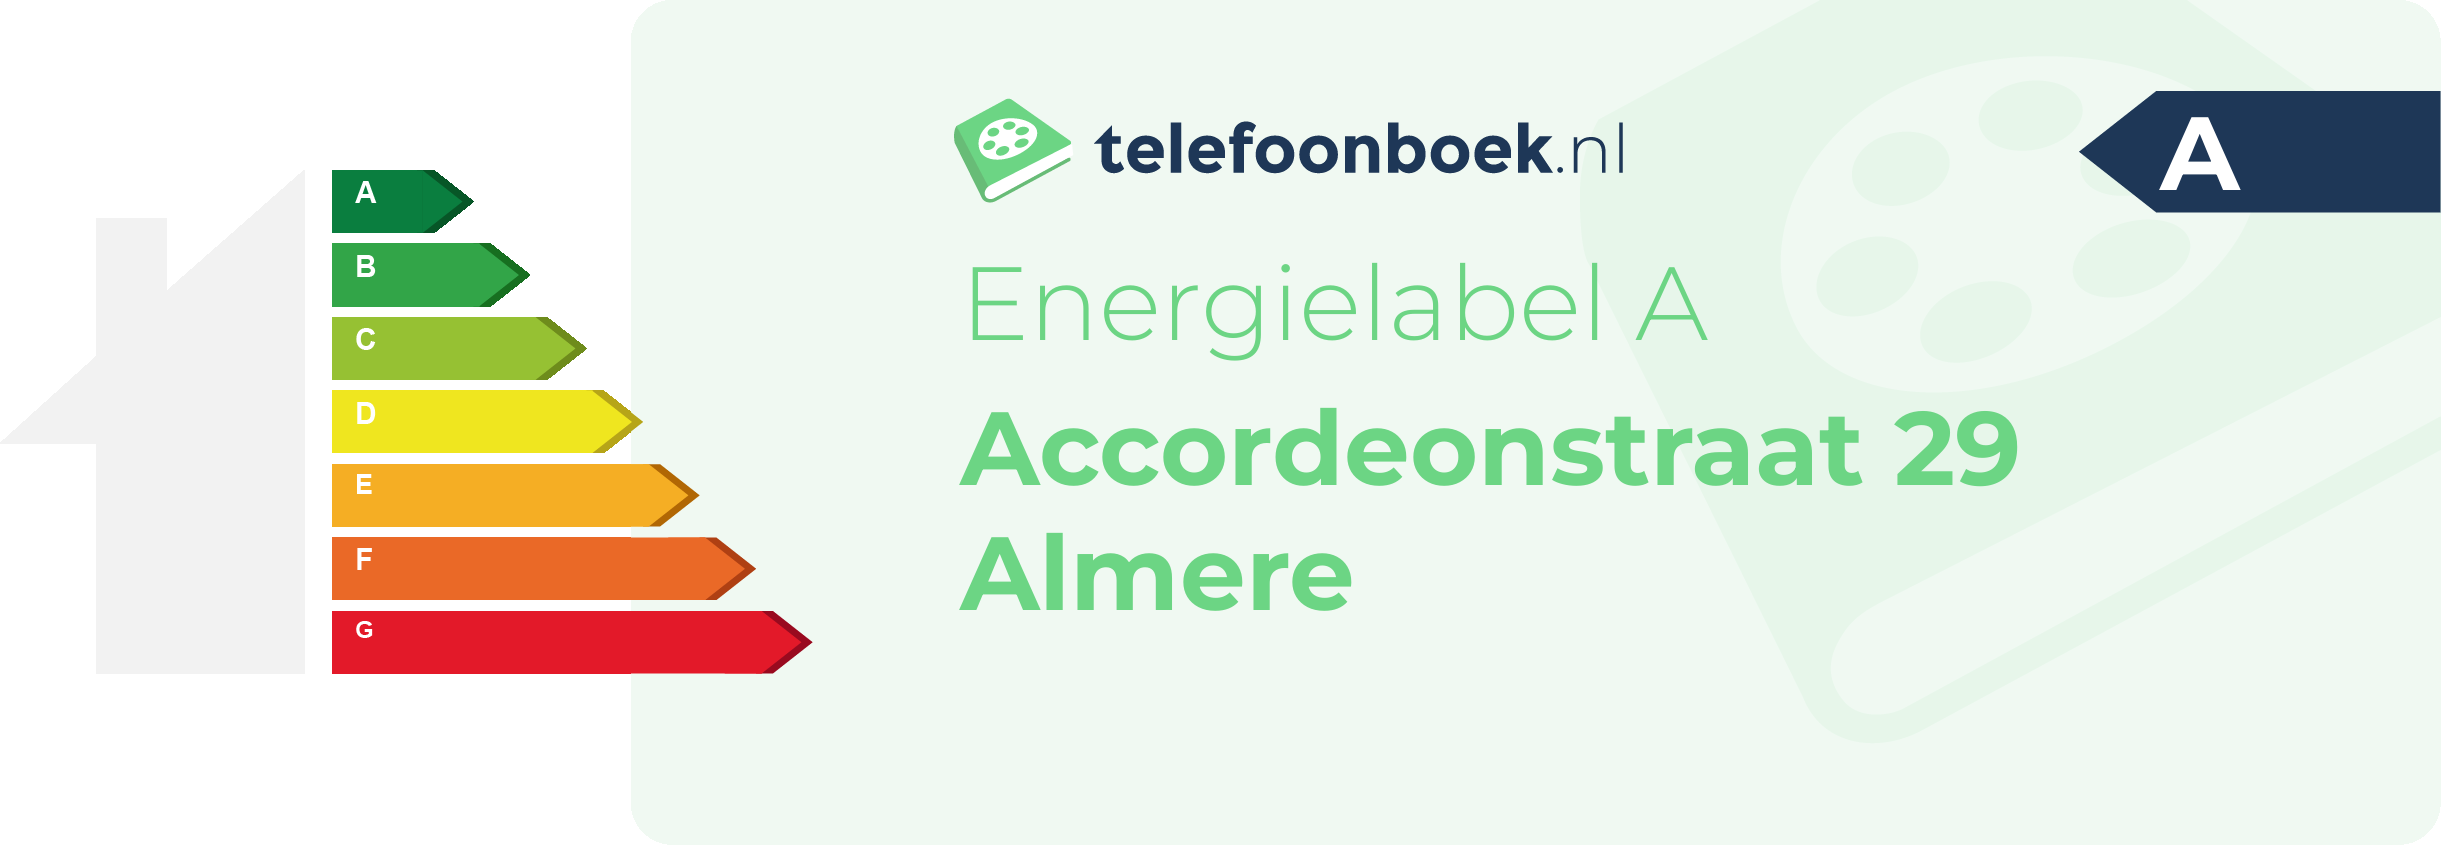 Energielabel Accordeonstraat 29 Almere